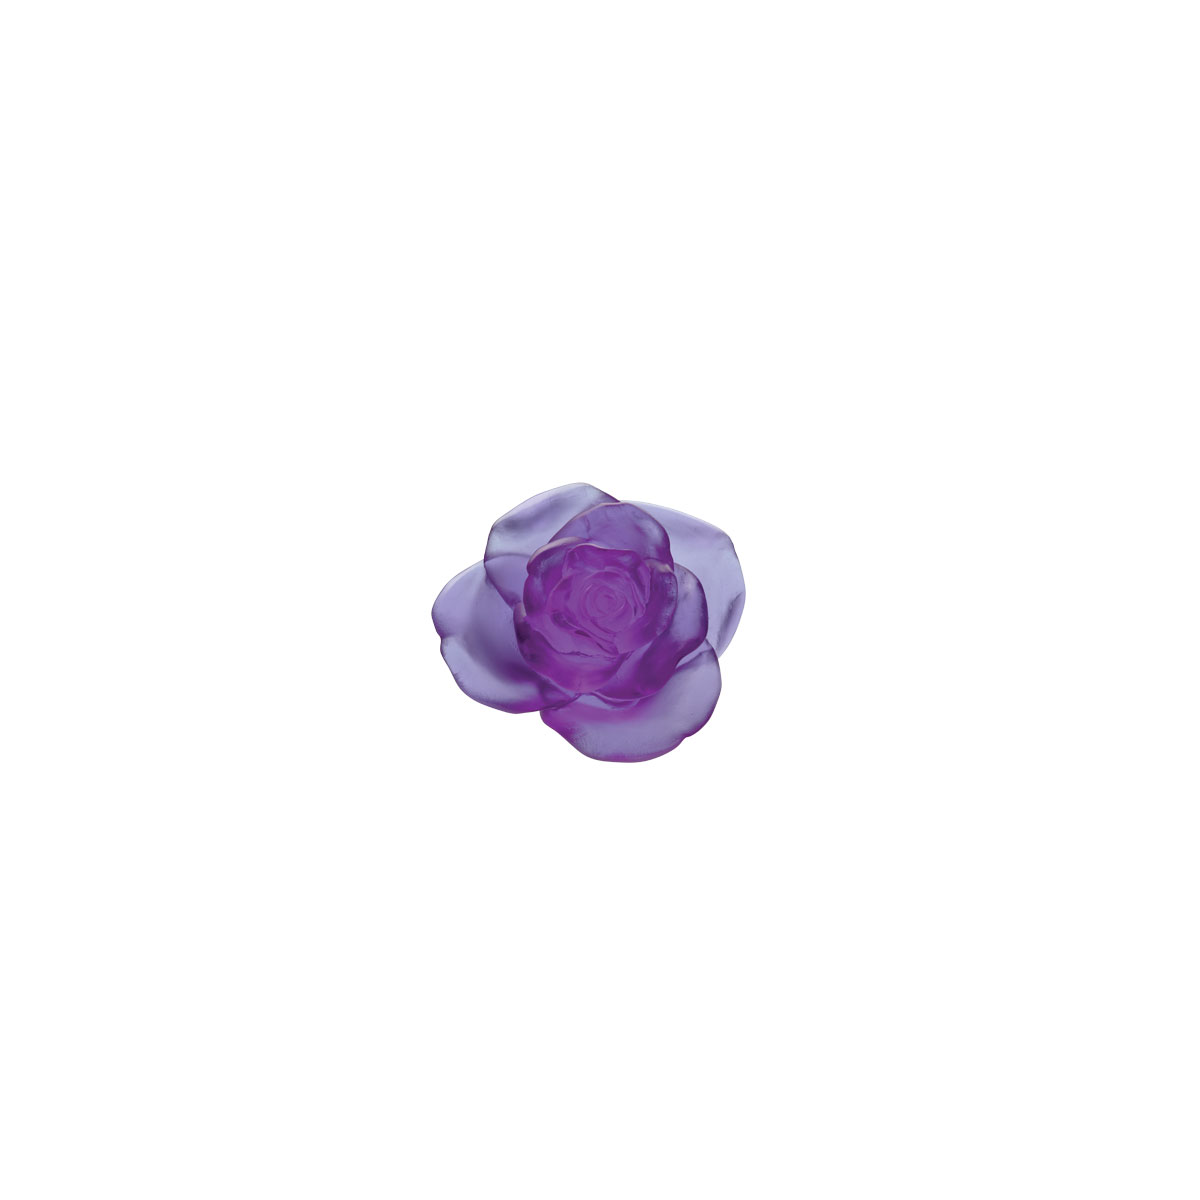 Daum Rose Passion Decorative Flower in Ultraviolet